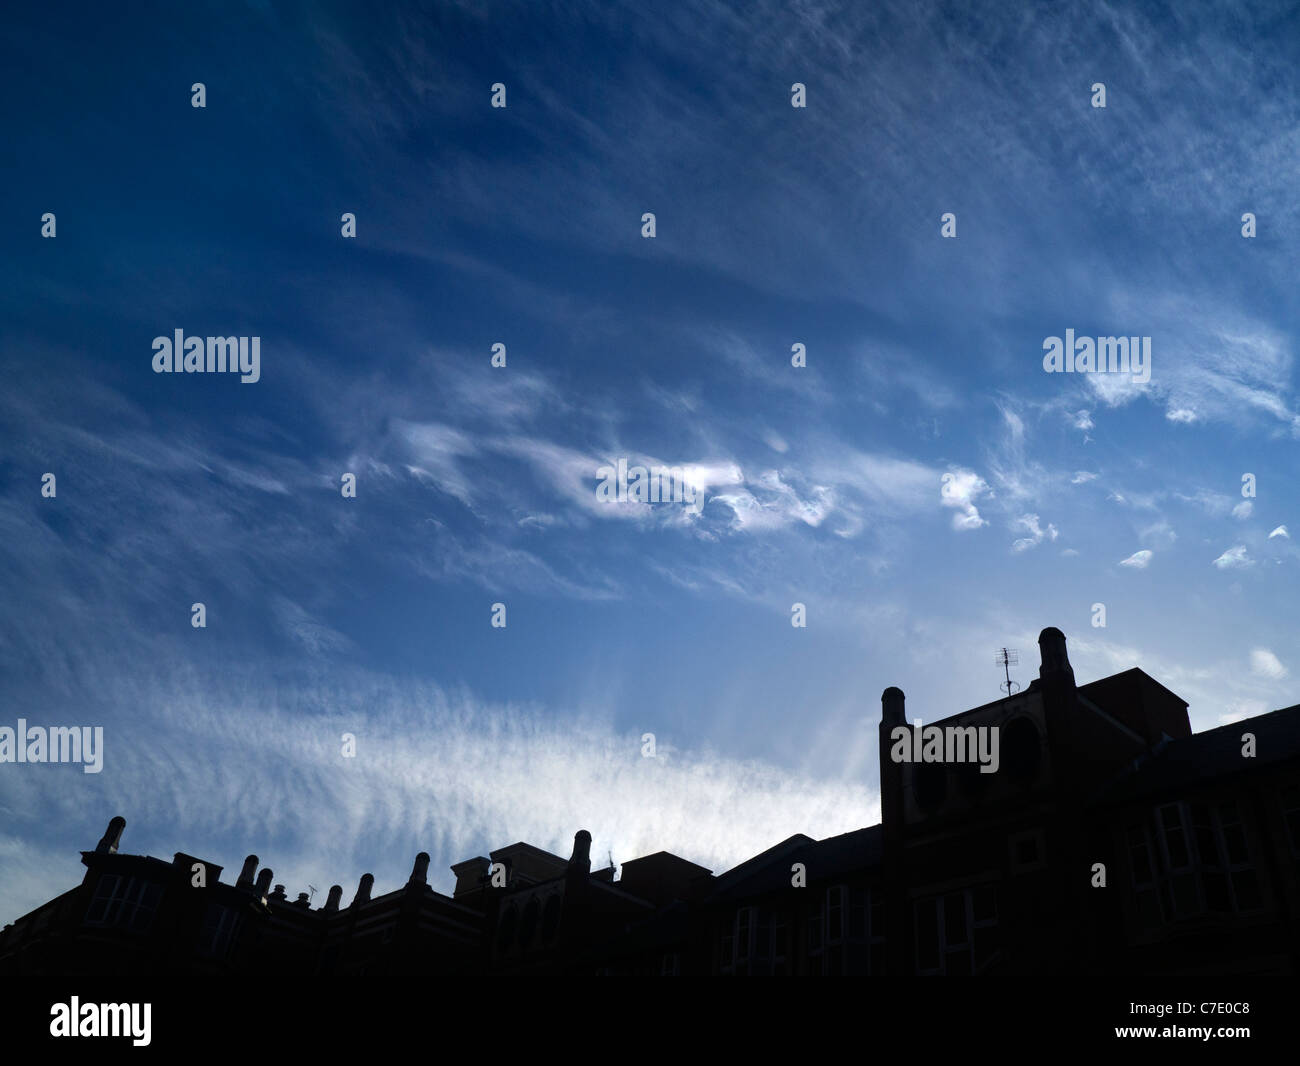 Hurricane Katya brings gales and strange skies to Oxford, England 2 Stock Photo